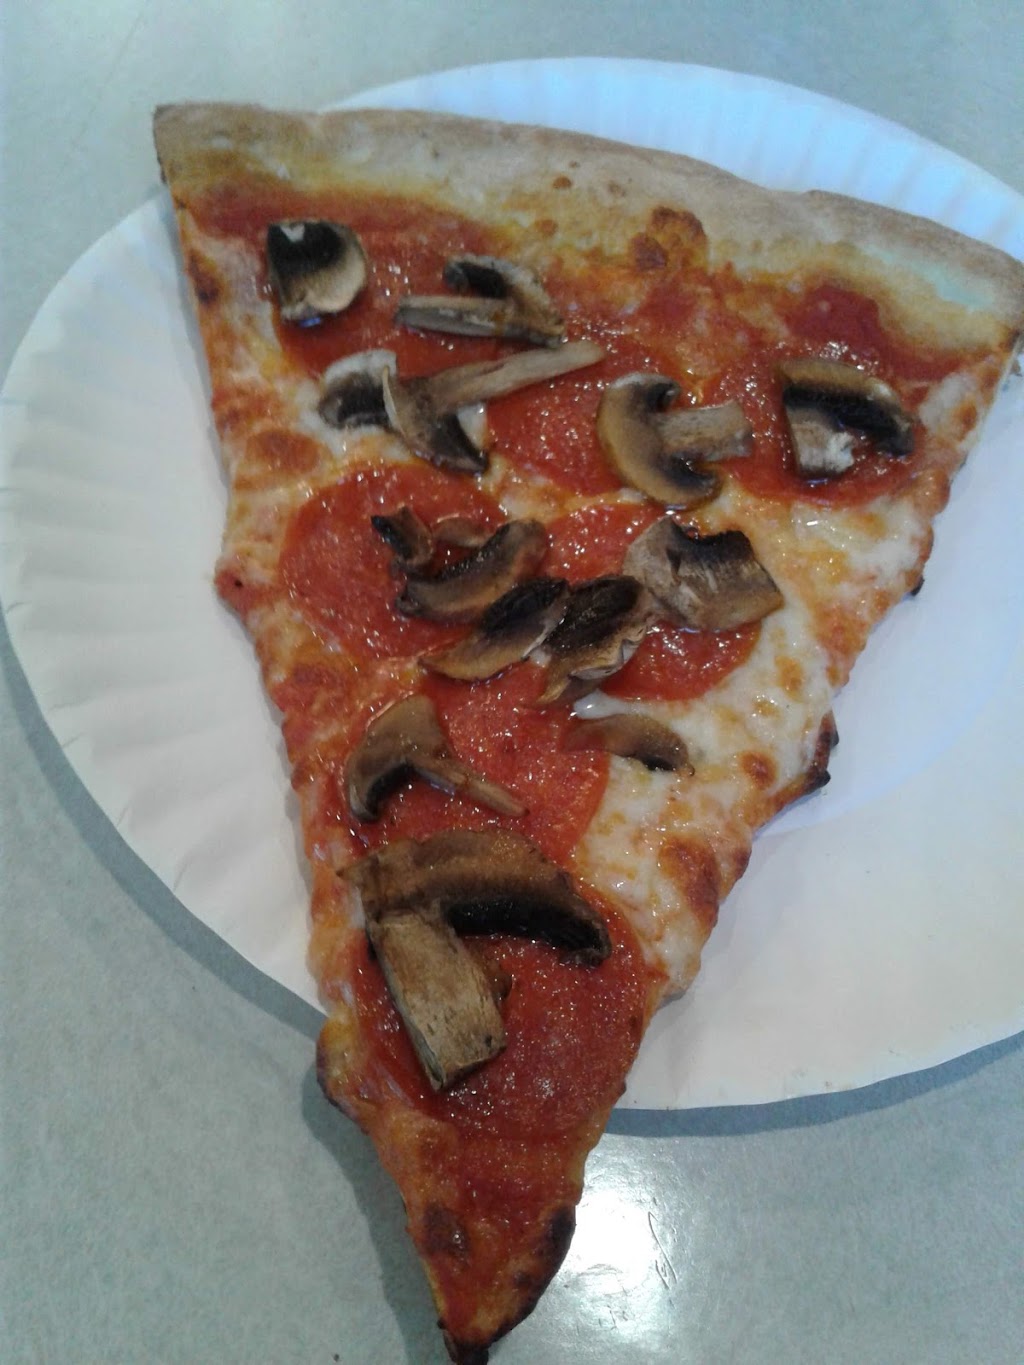 Dominicks Pizza | 31 Lackawanna Ave, Gladstone, NJ 07934 | Phone: (908) 495-7620